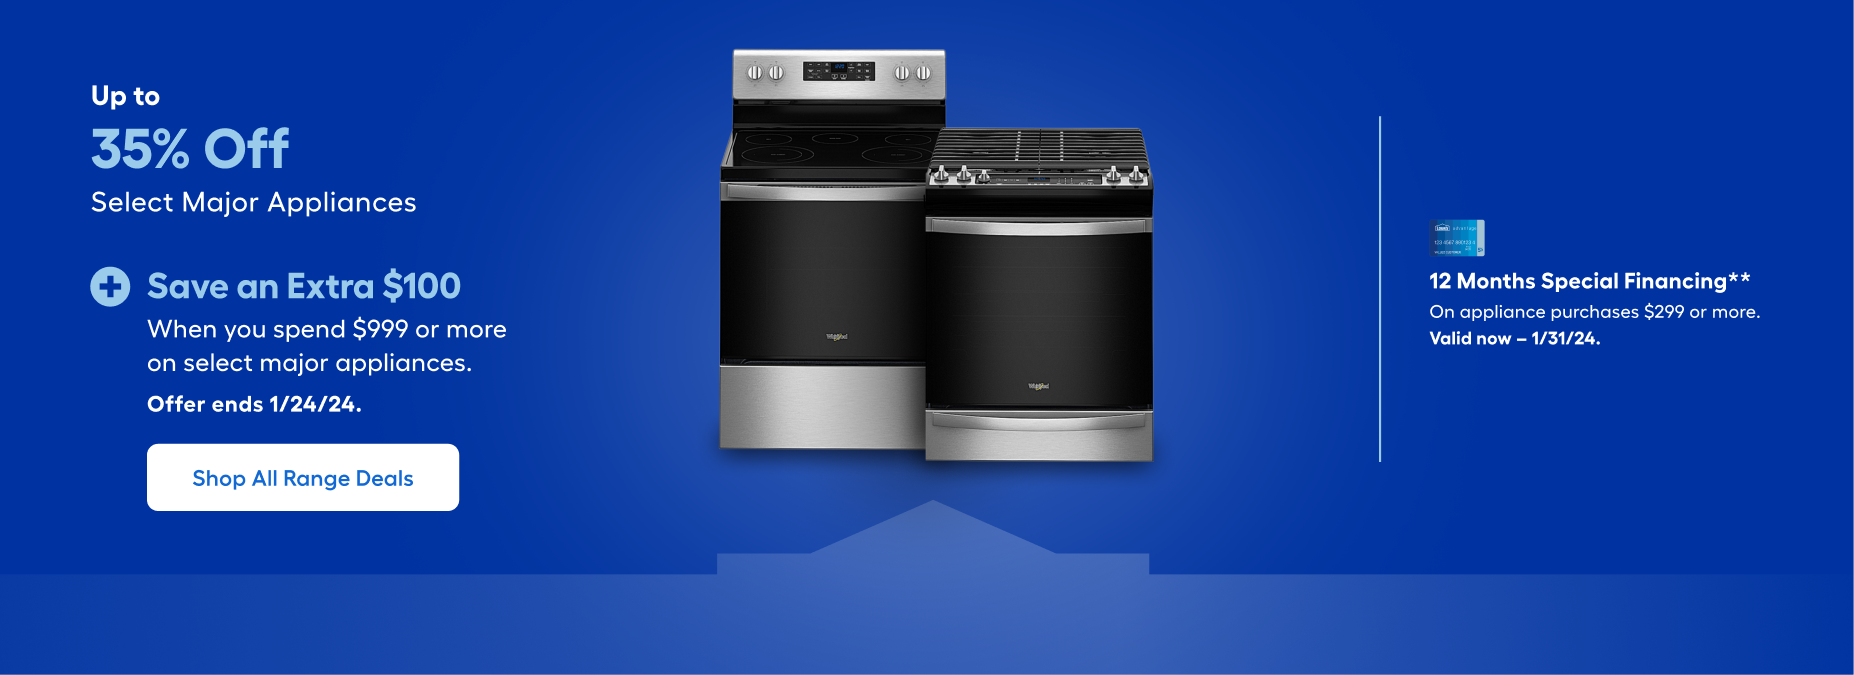 Kitchen Countertop Protector Appliance Slider Mat Air Fryer Heat Resistant  Mat Black Single - Yahoo Shopping